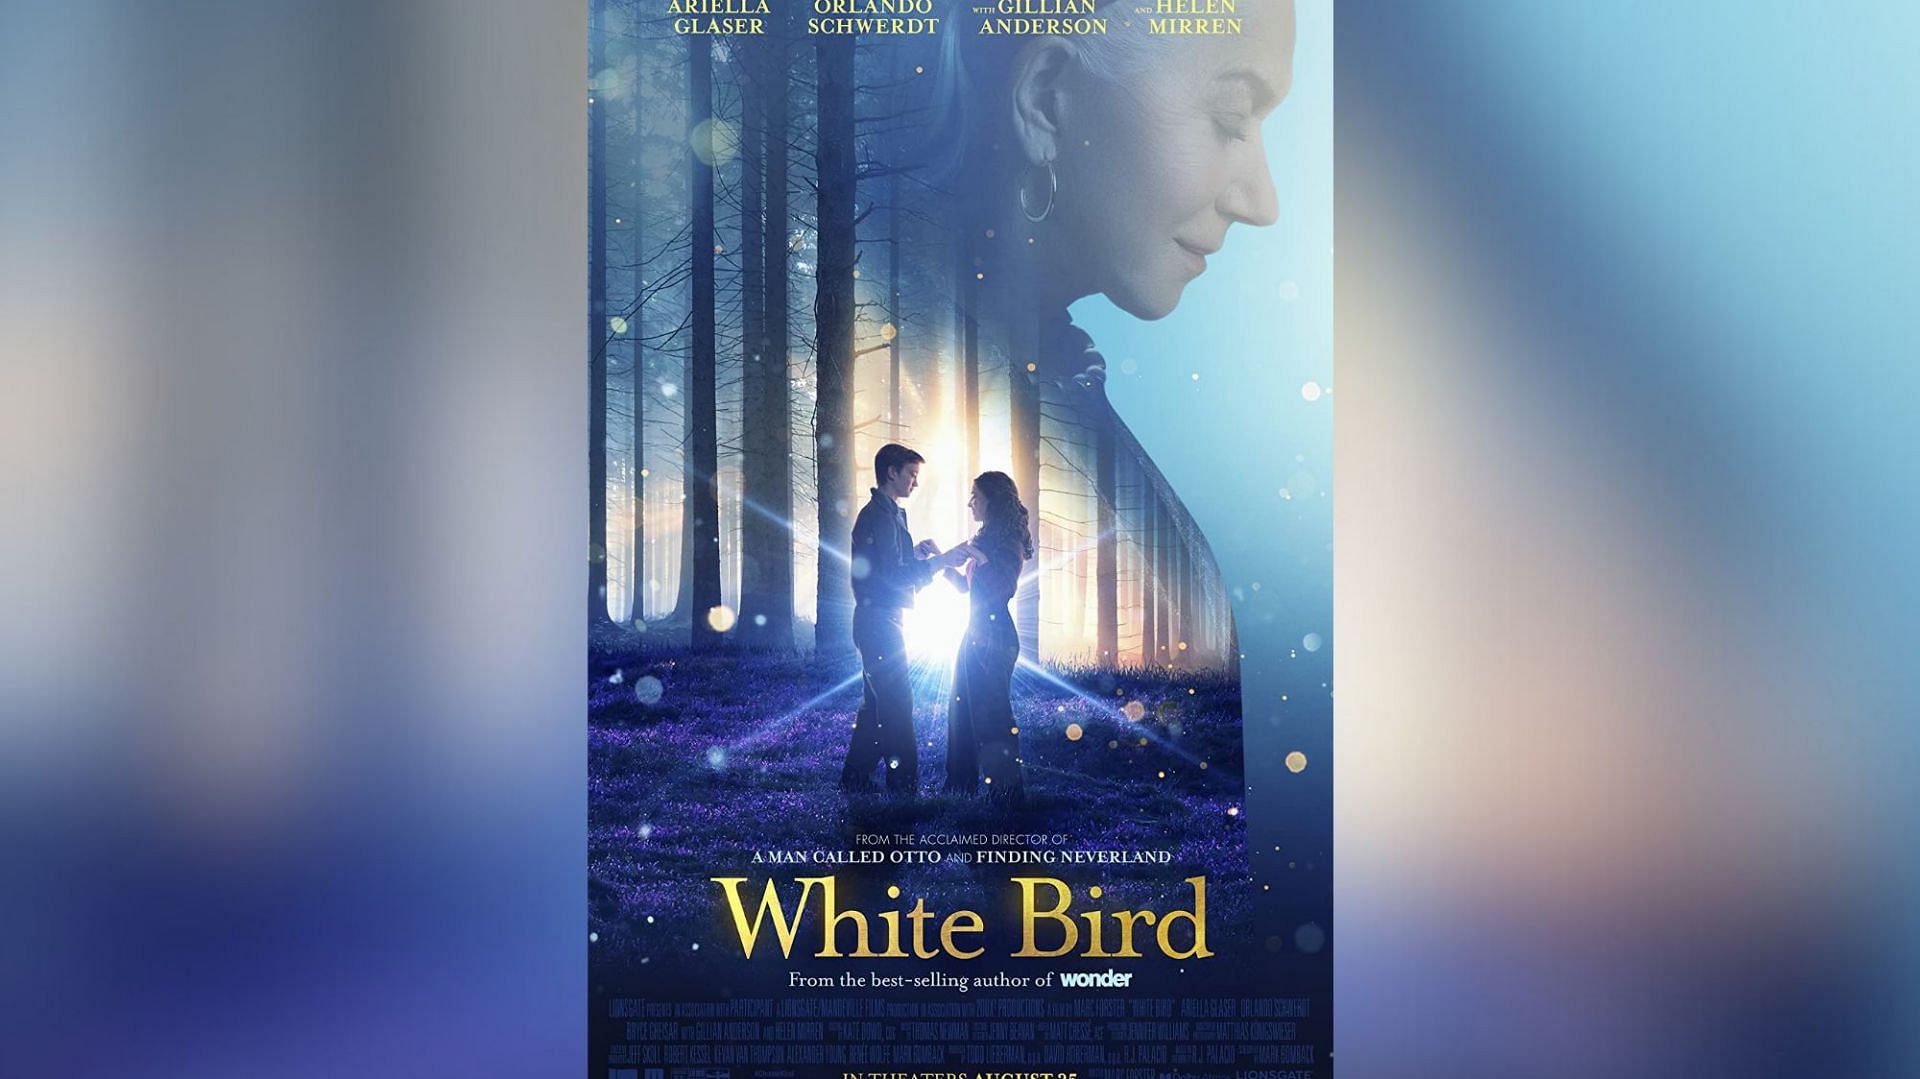 White Bird (Image via Lionsgate)